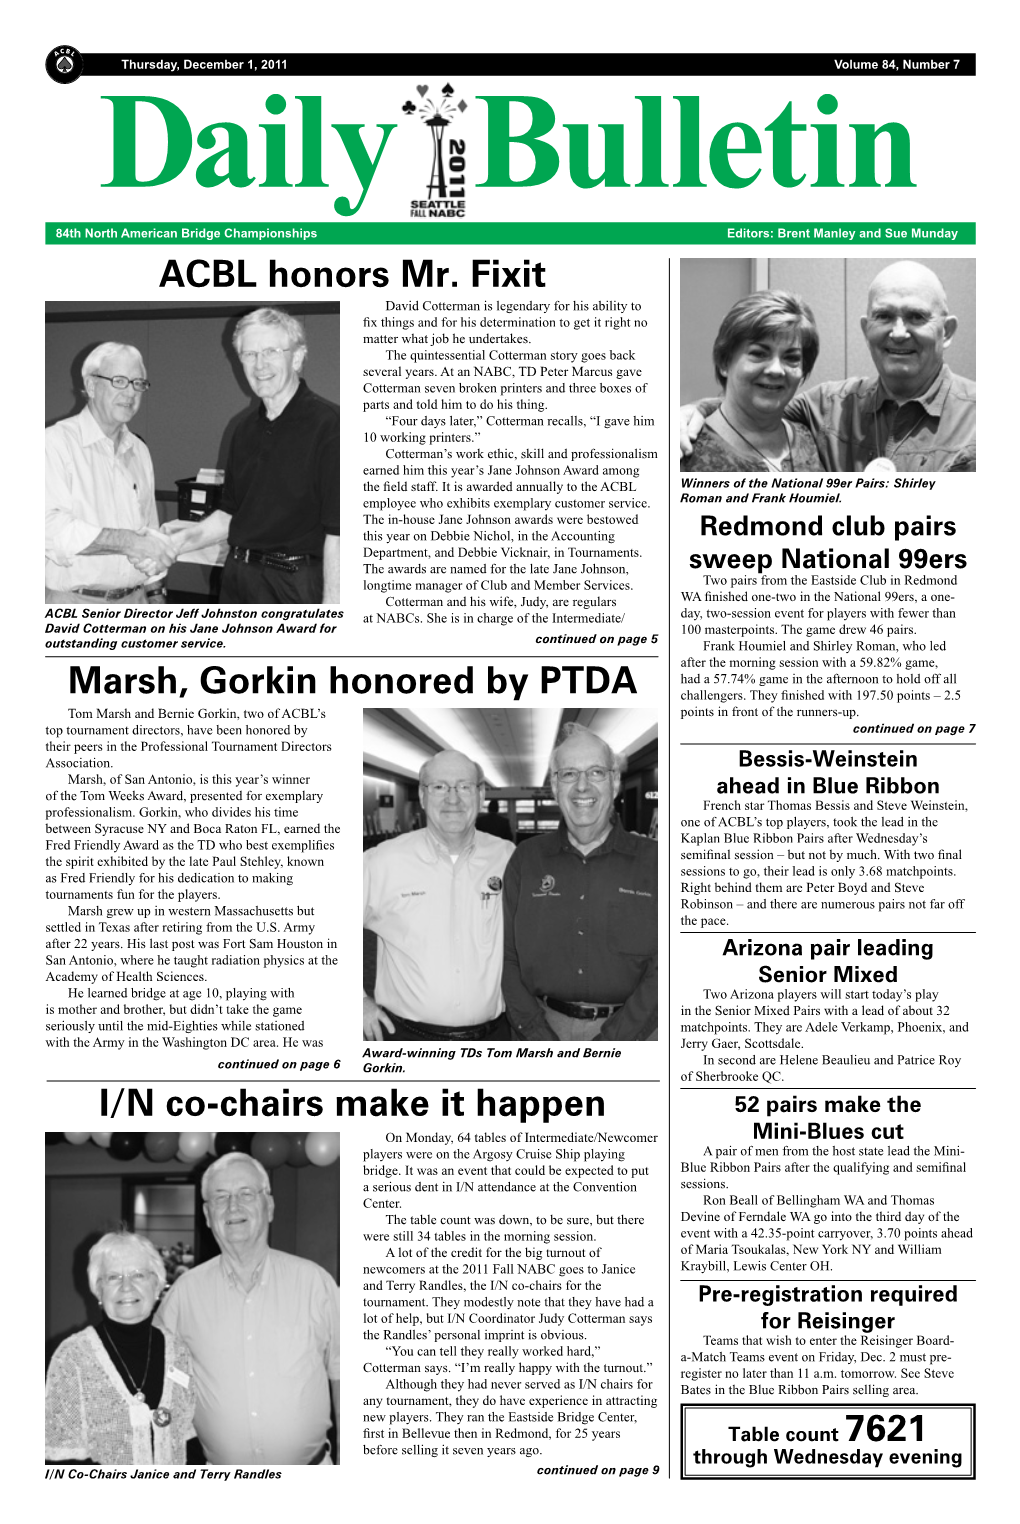 ACBL Honors Mr. Fixit Marsh, Gorkin Honored by PTDA I/N Co-Chairs